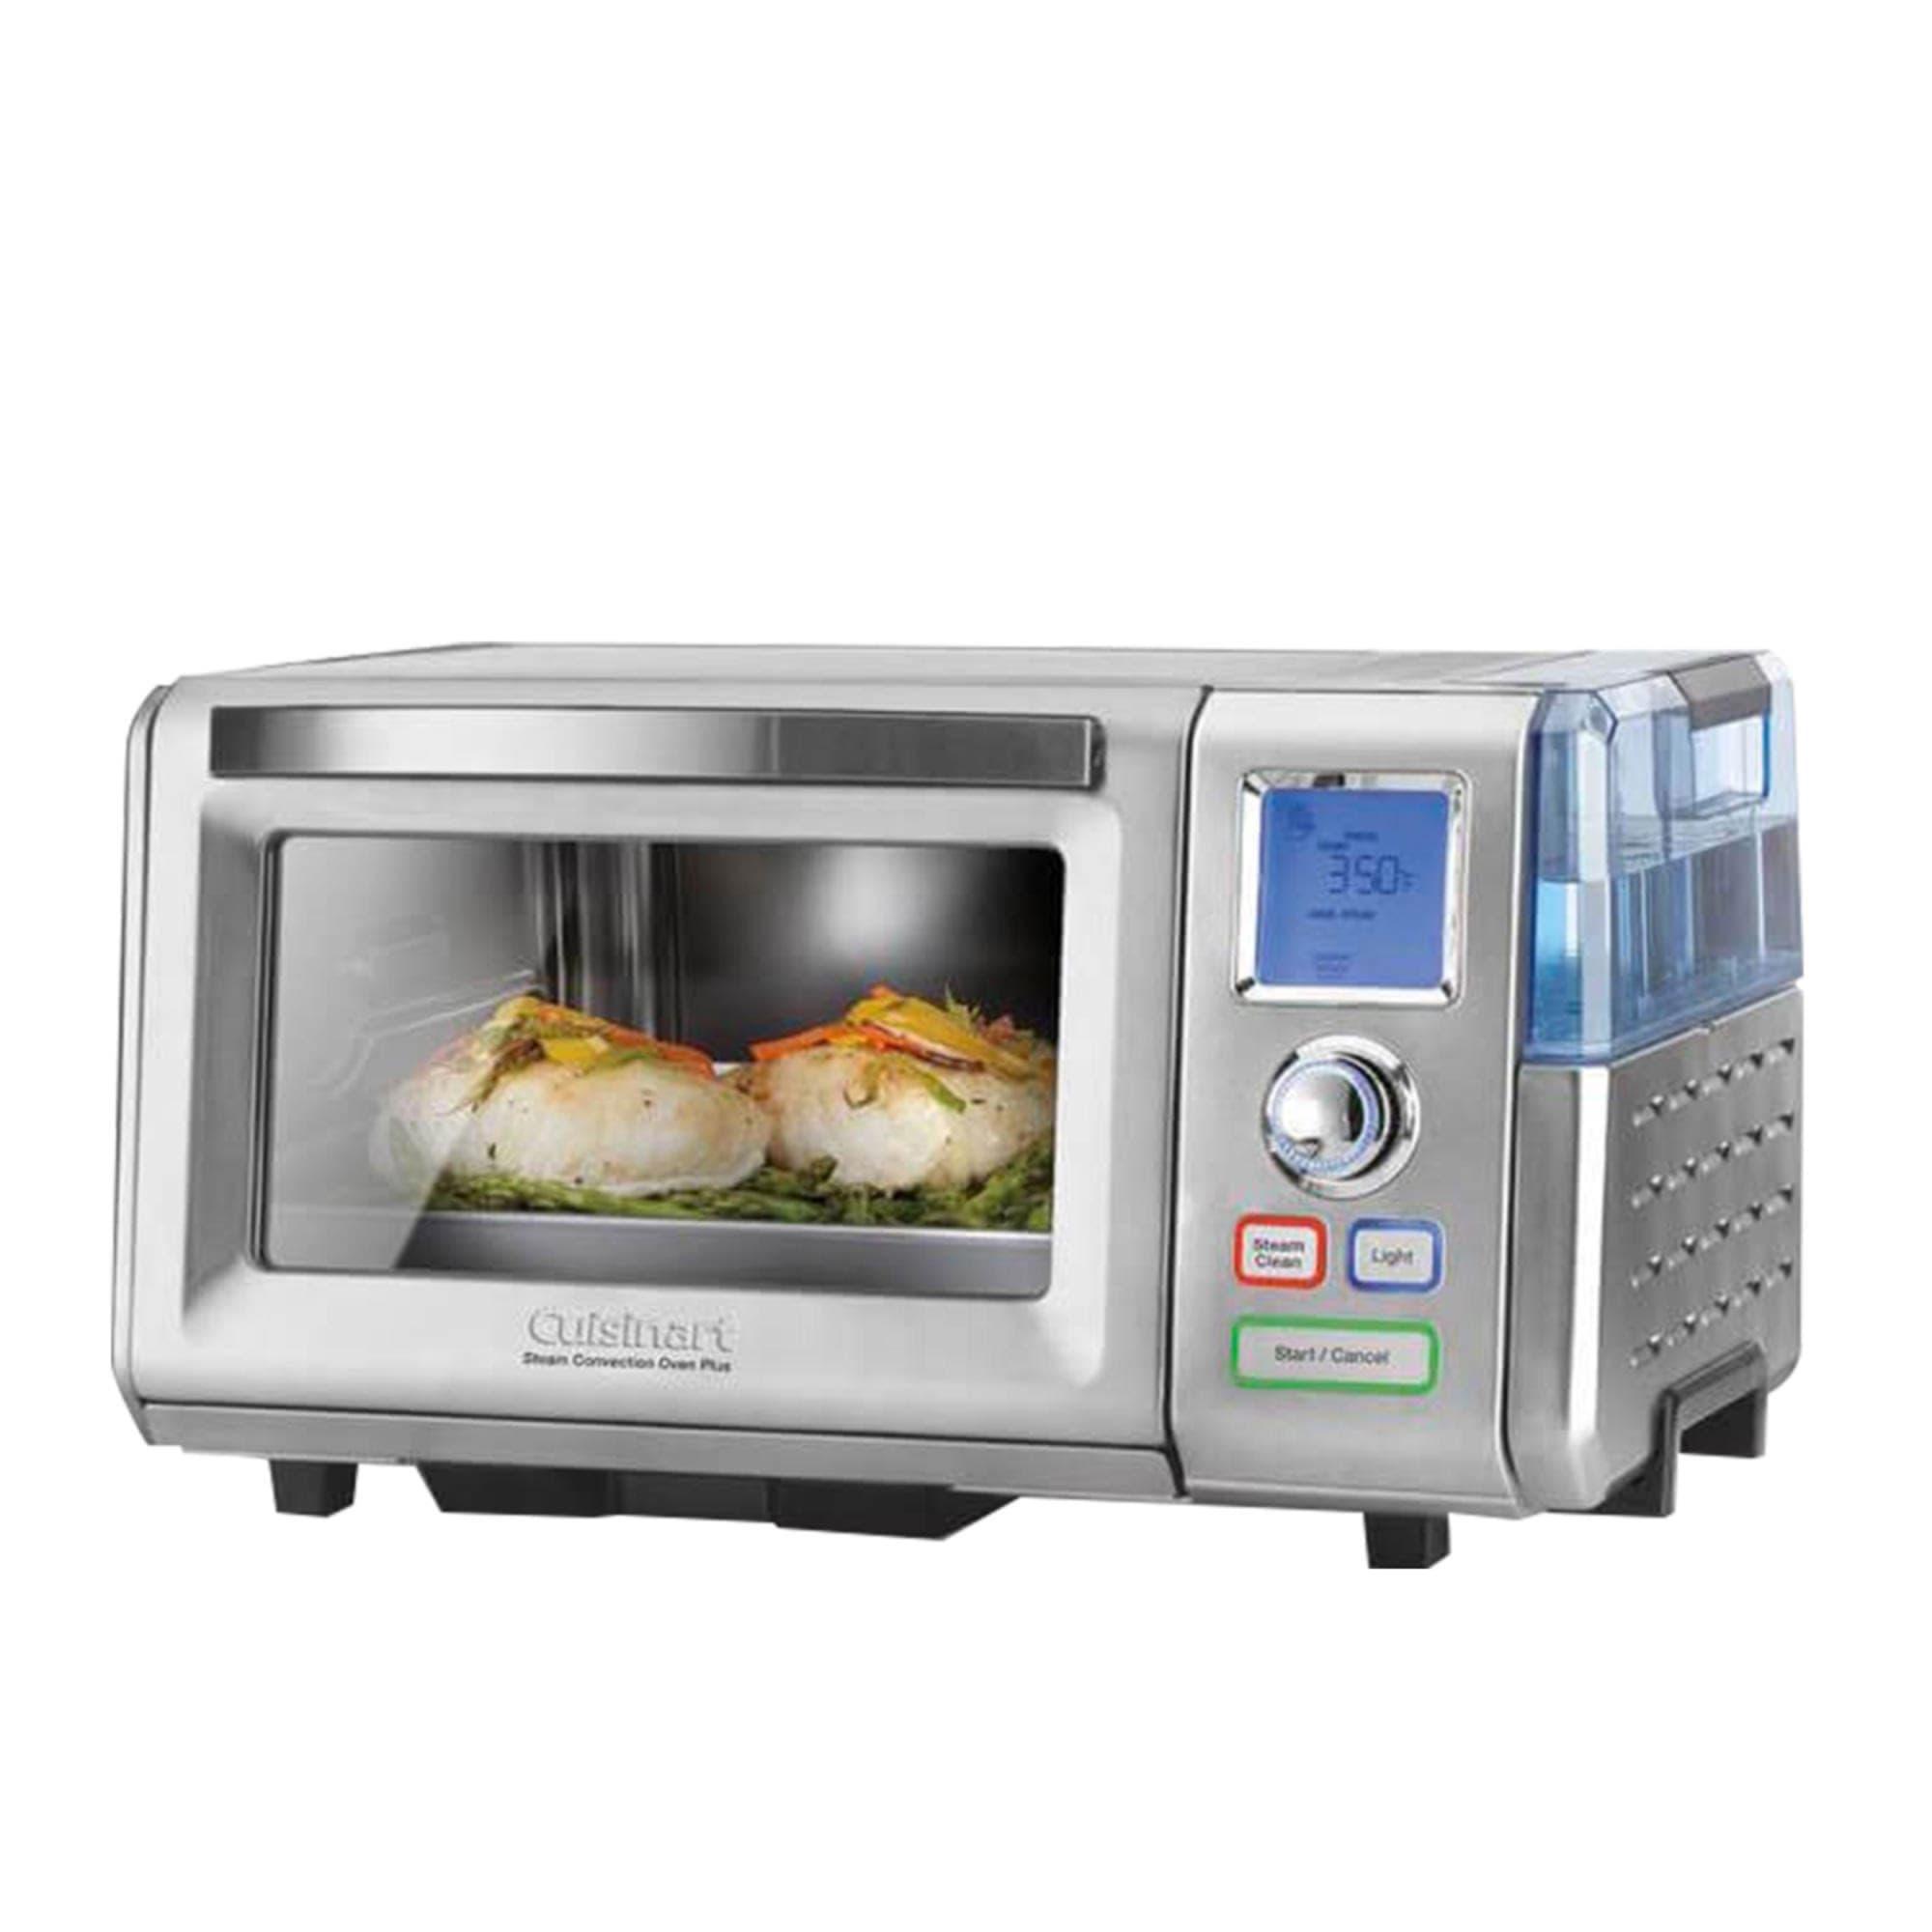 Cuisinart Steam & Convection Oven 17L Image 4